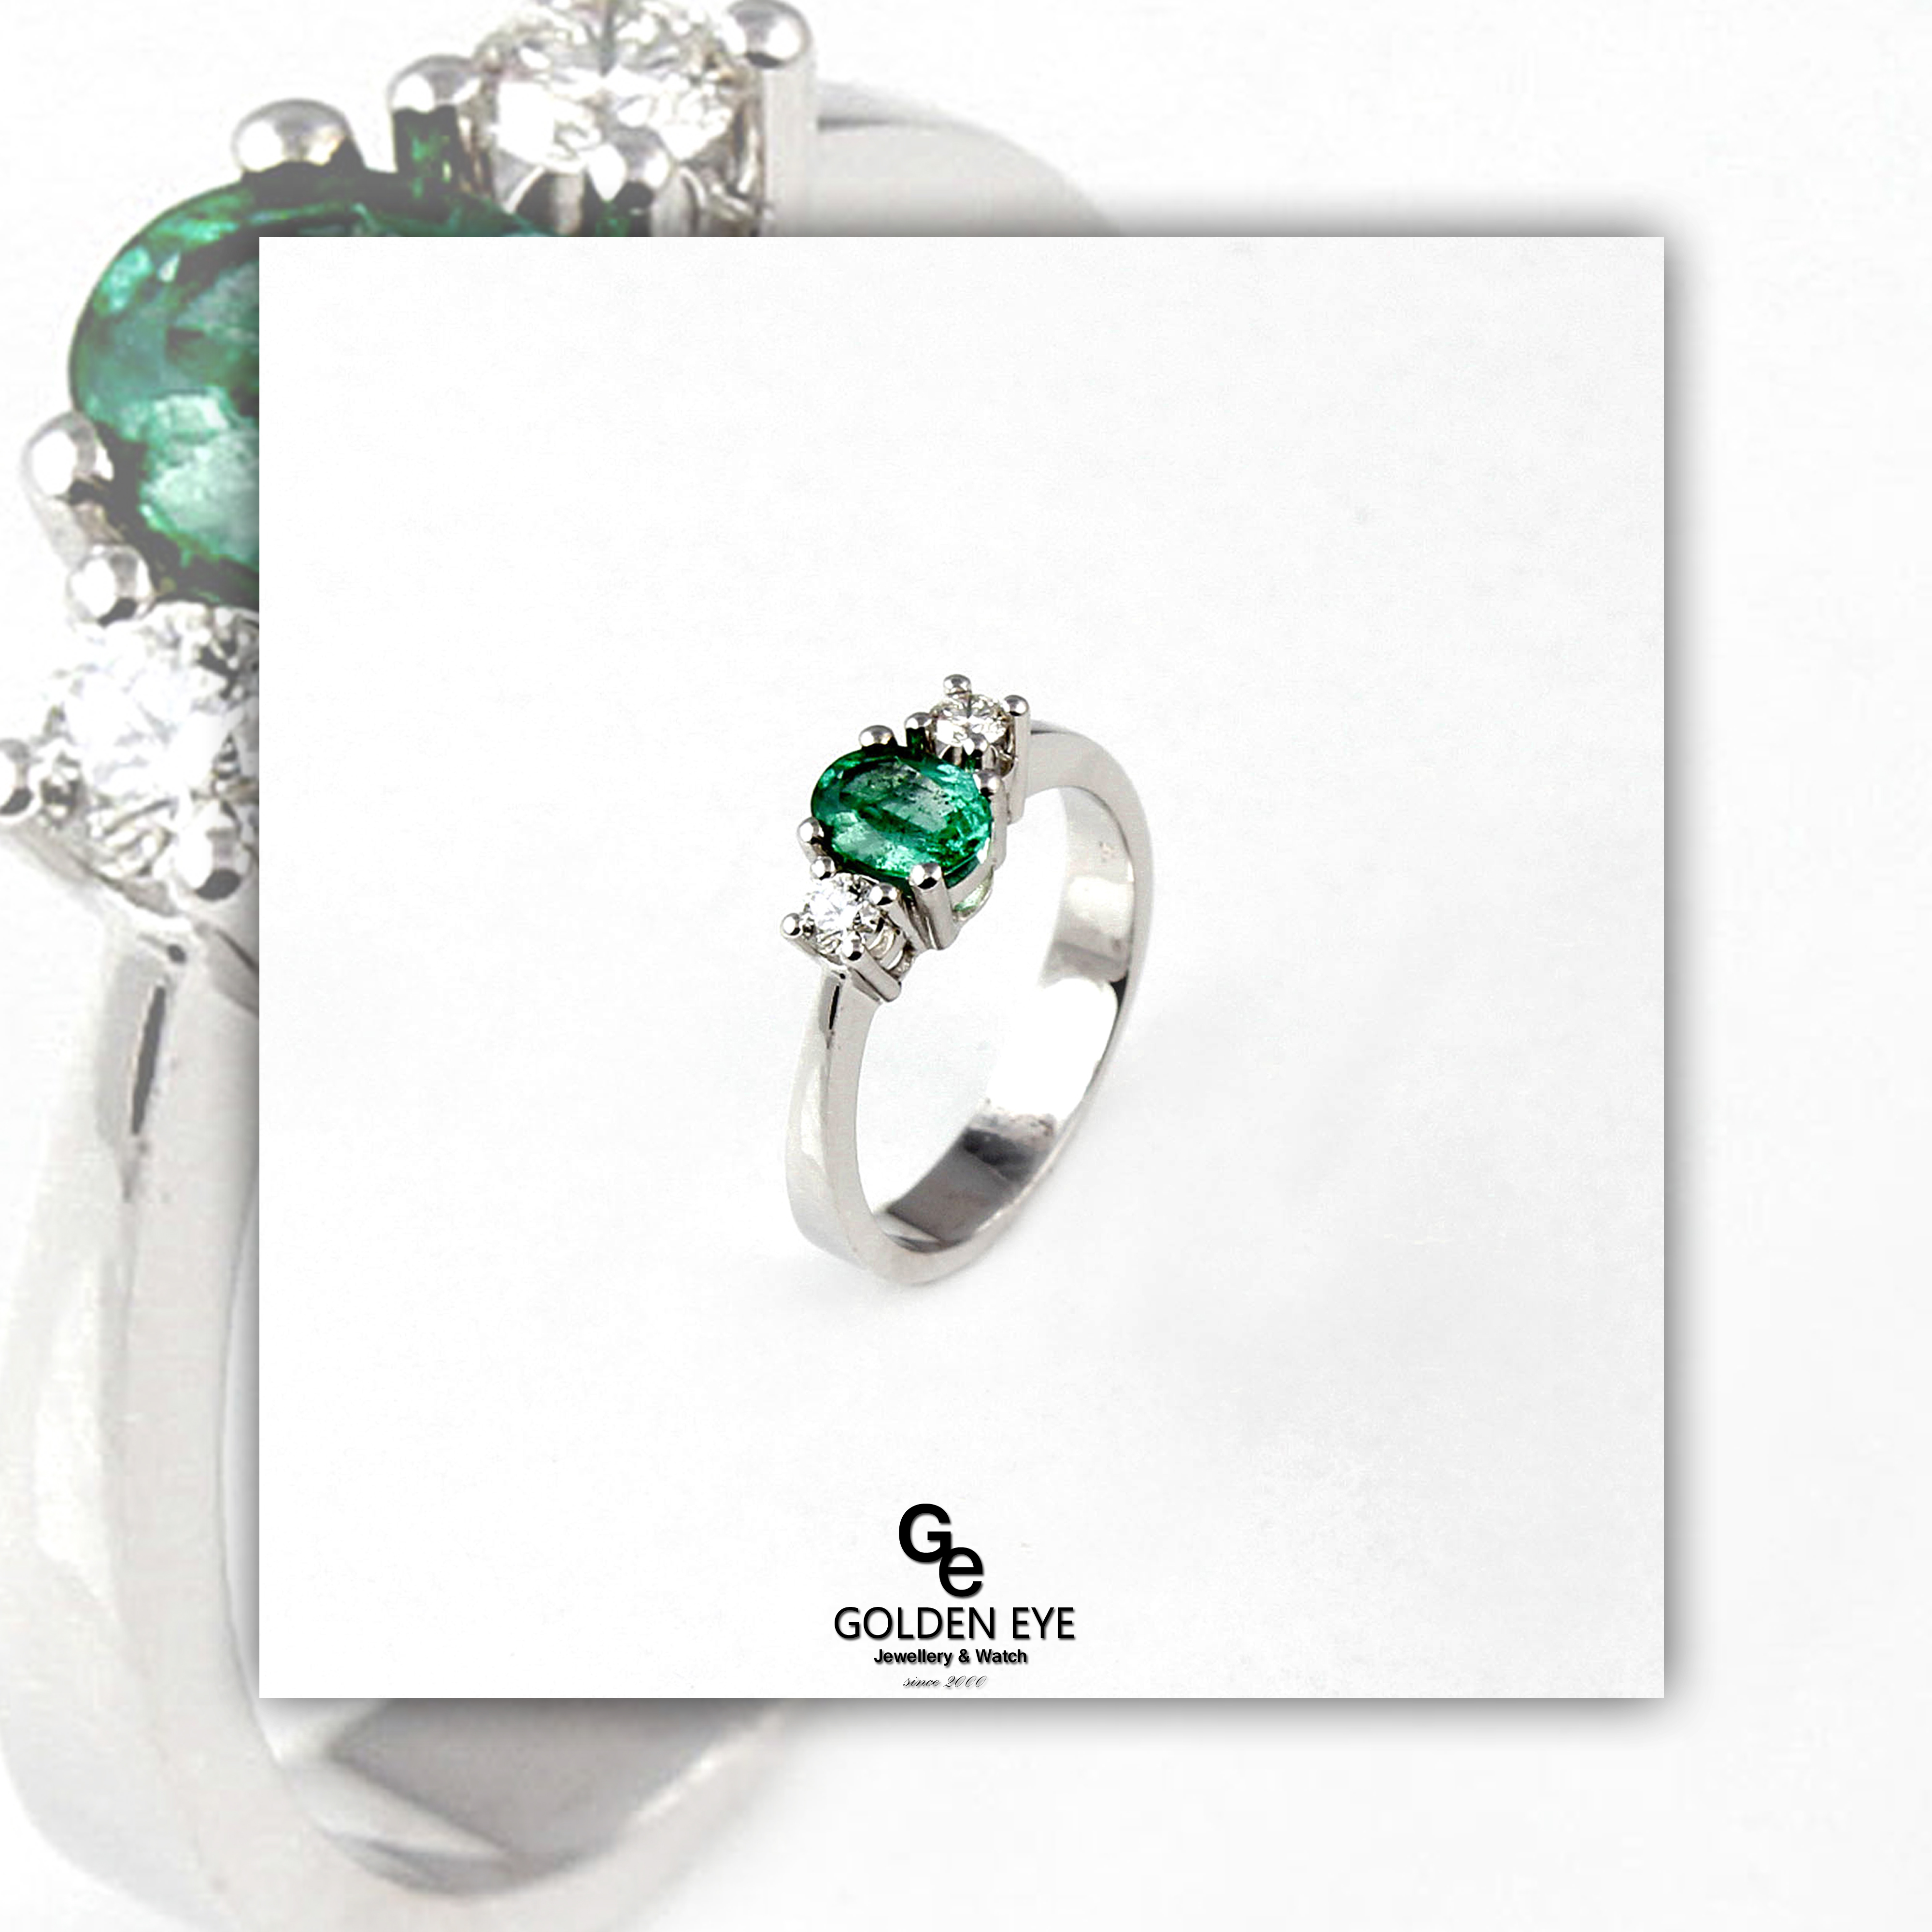 R034B hvid guld Ring med Emerald og diamanter